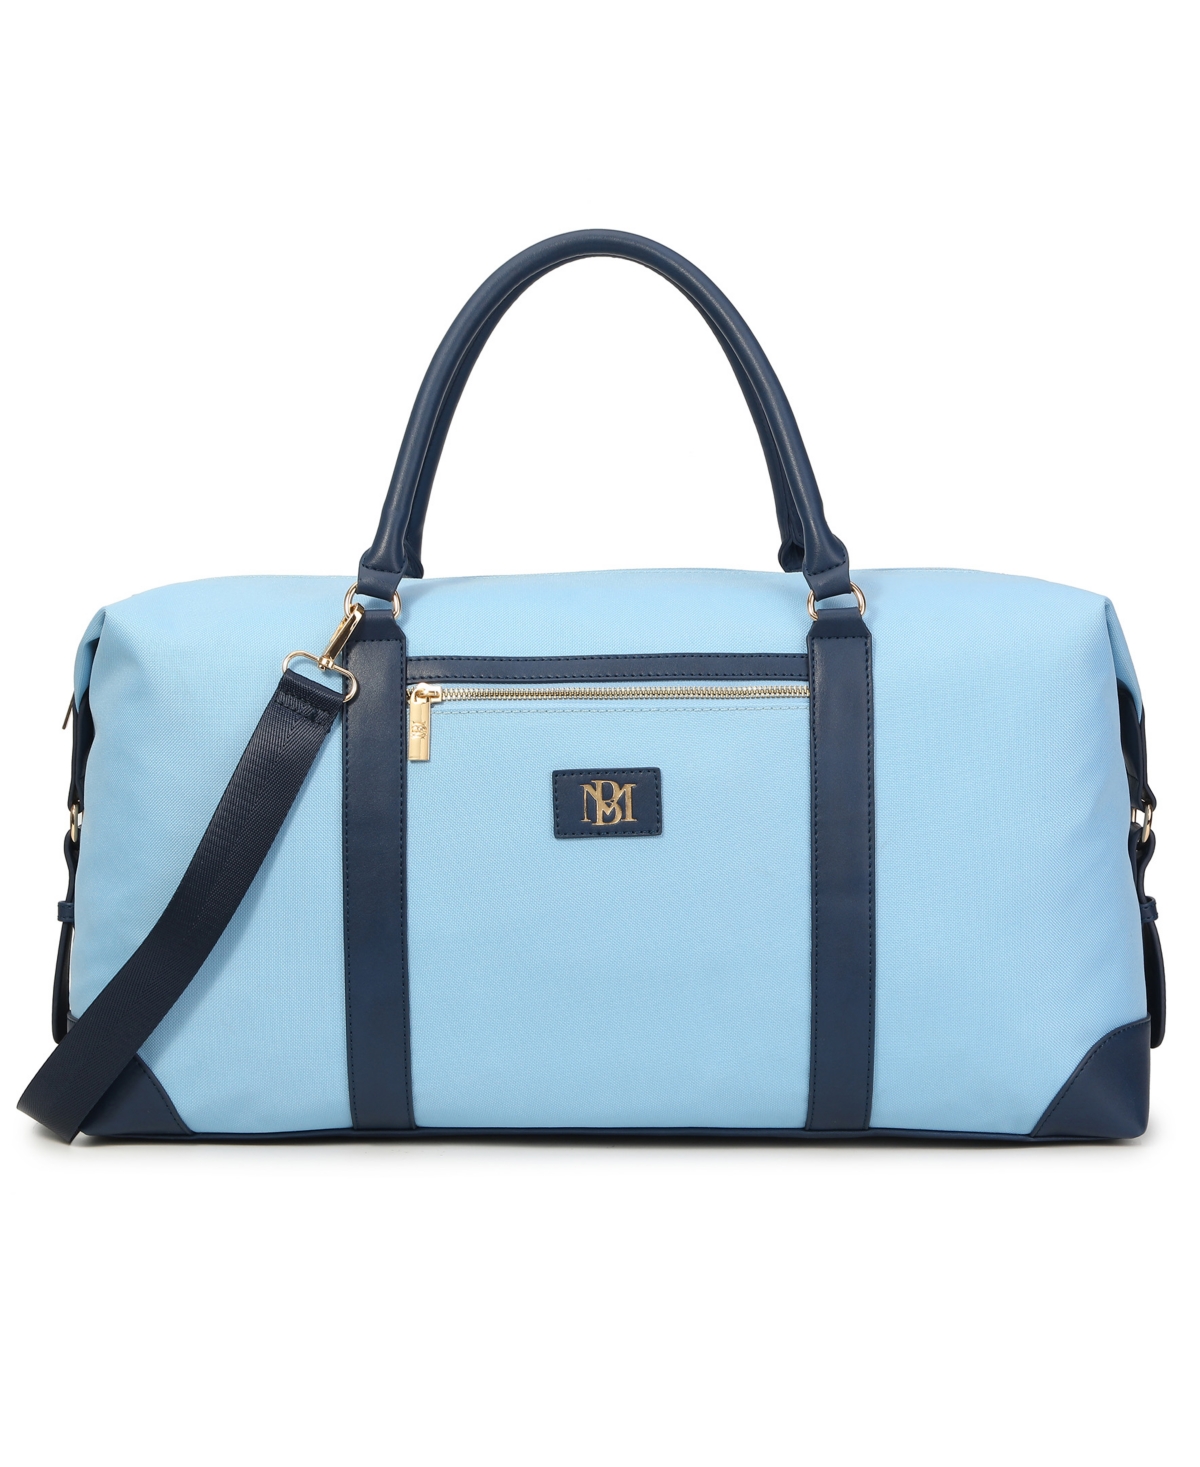 Barbara Xl Tote Weekender Travel Bag - Light Blue